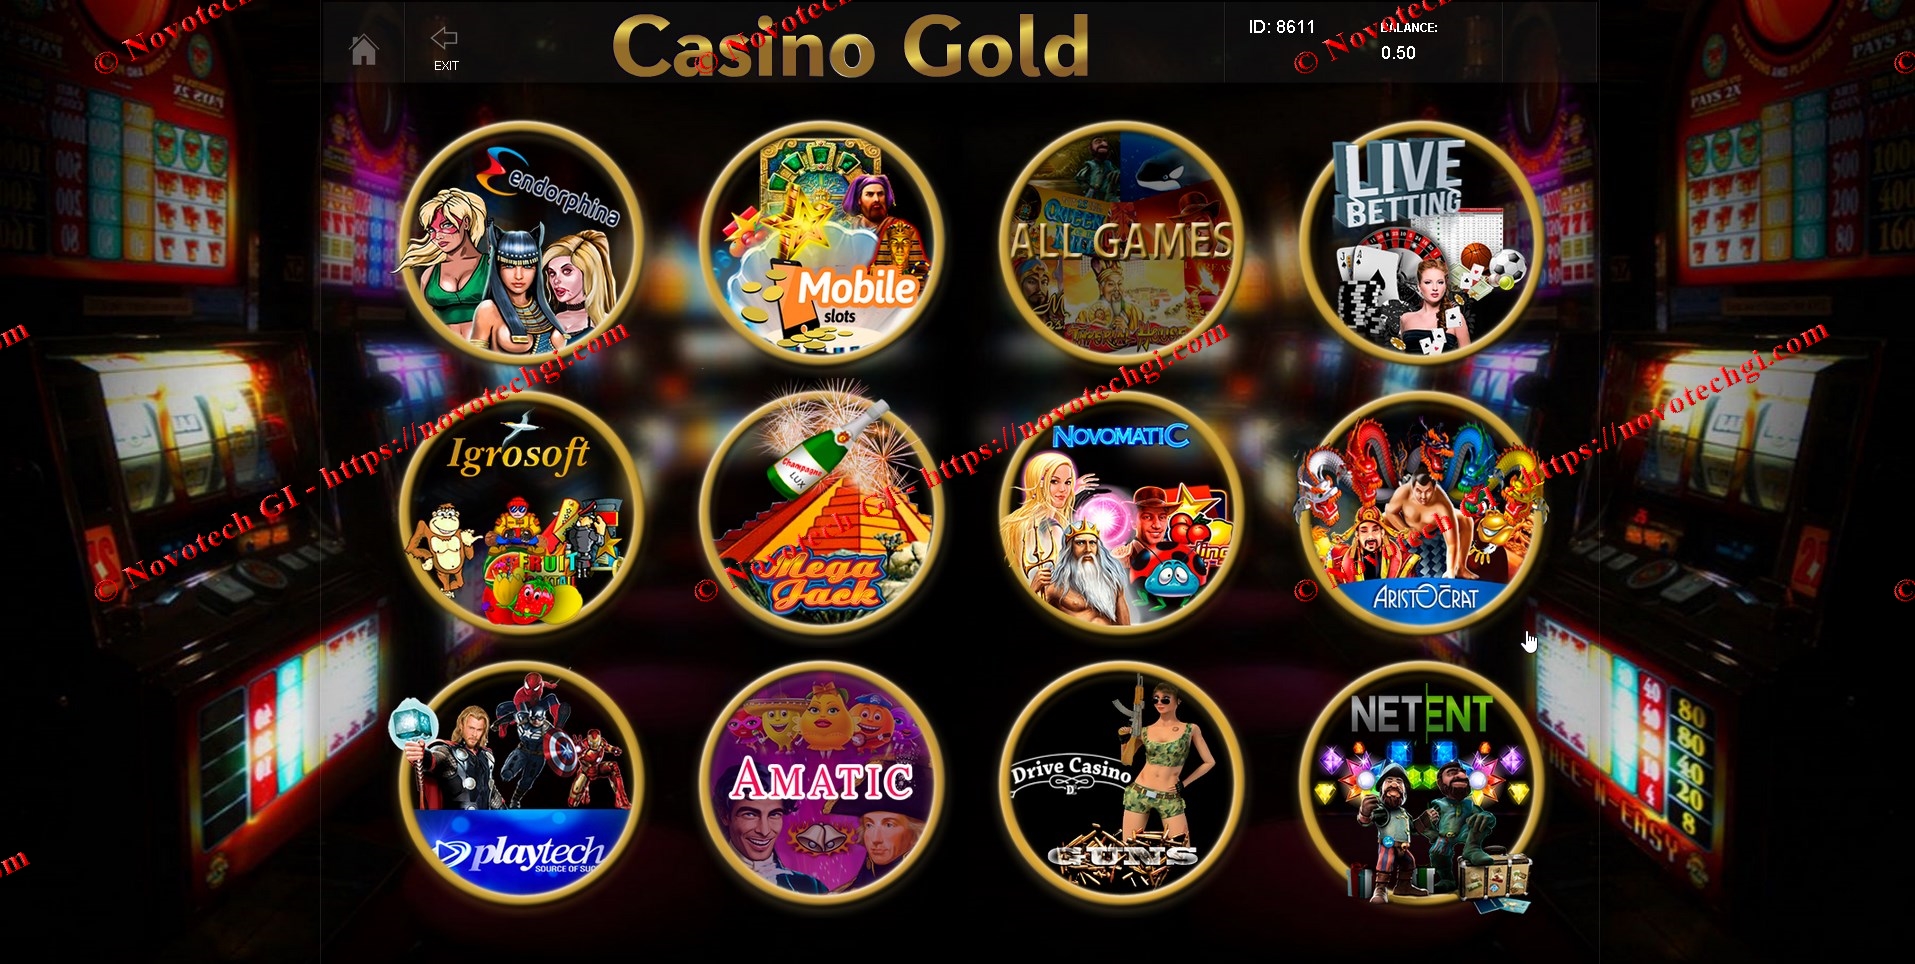  Casino GOLD,     : Novomatic, Aristocrat, PlayTech, NetEnt, Igrosoft, GreenBet, GoldenRace, LiveDealers, Onebet, BetStore